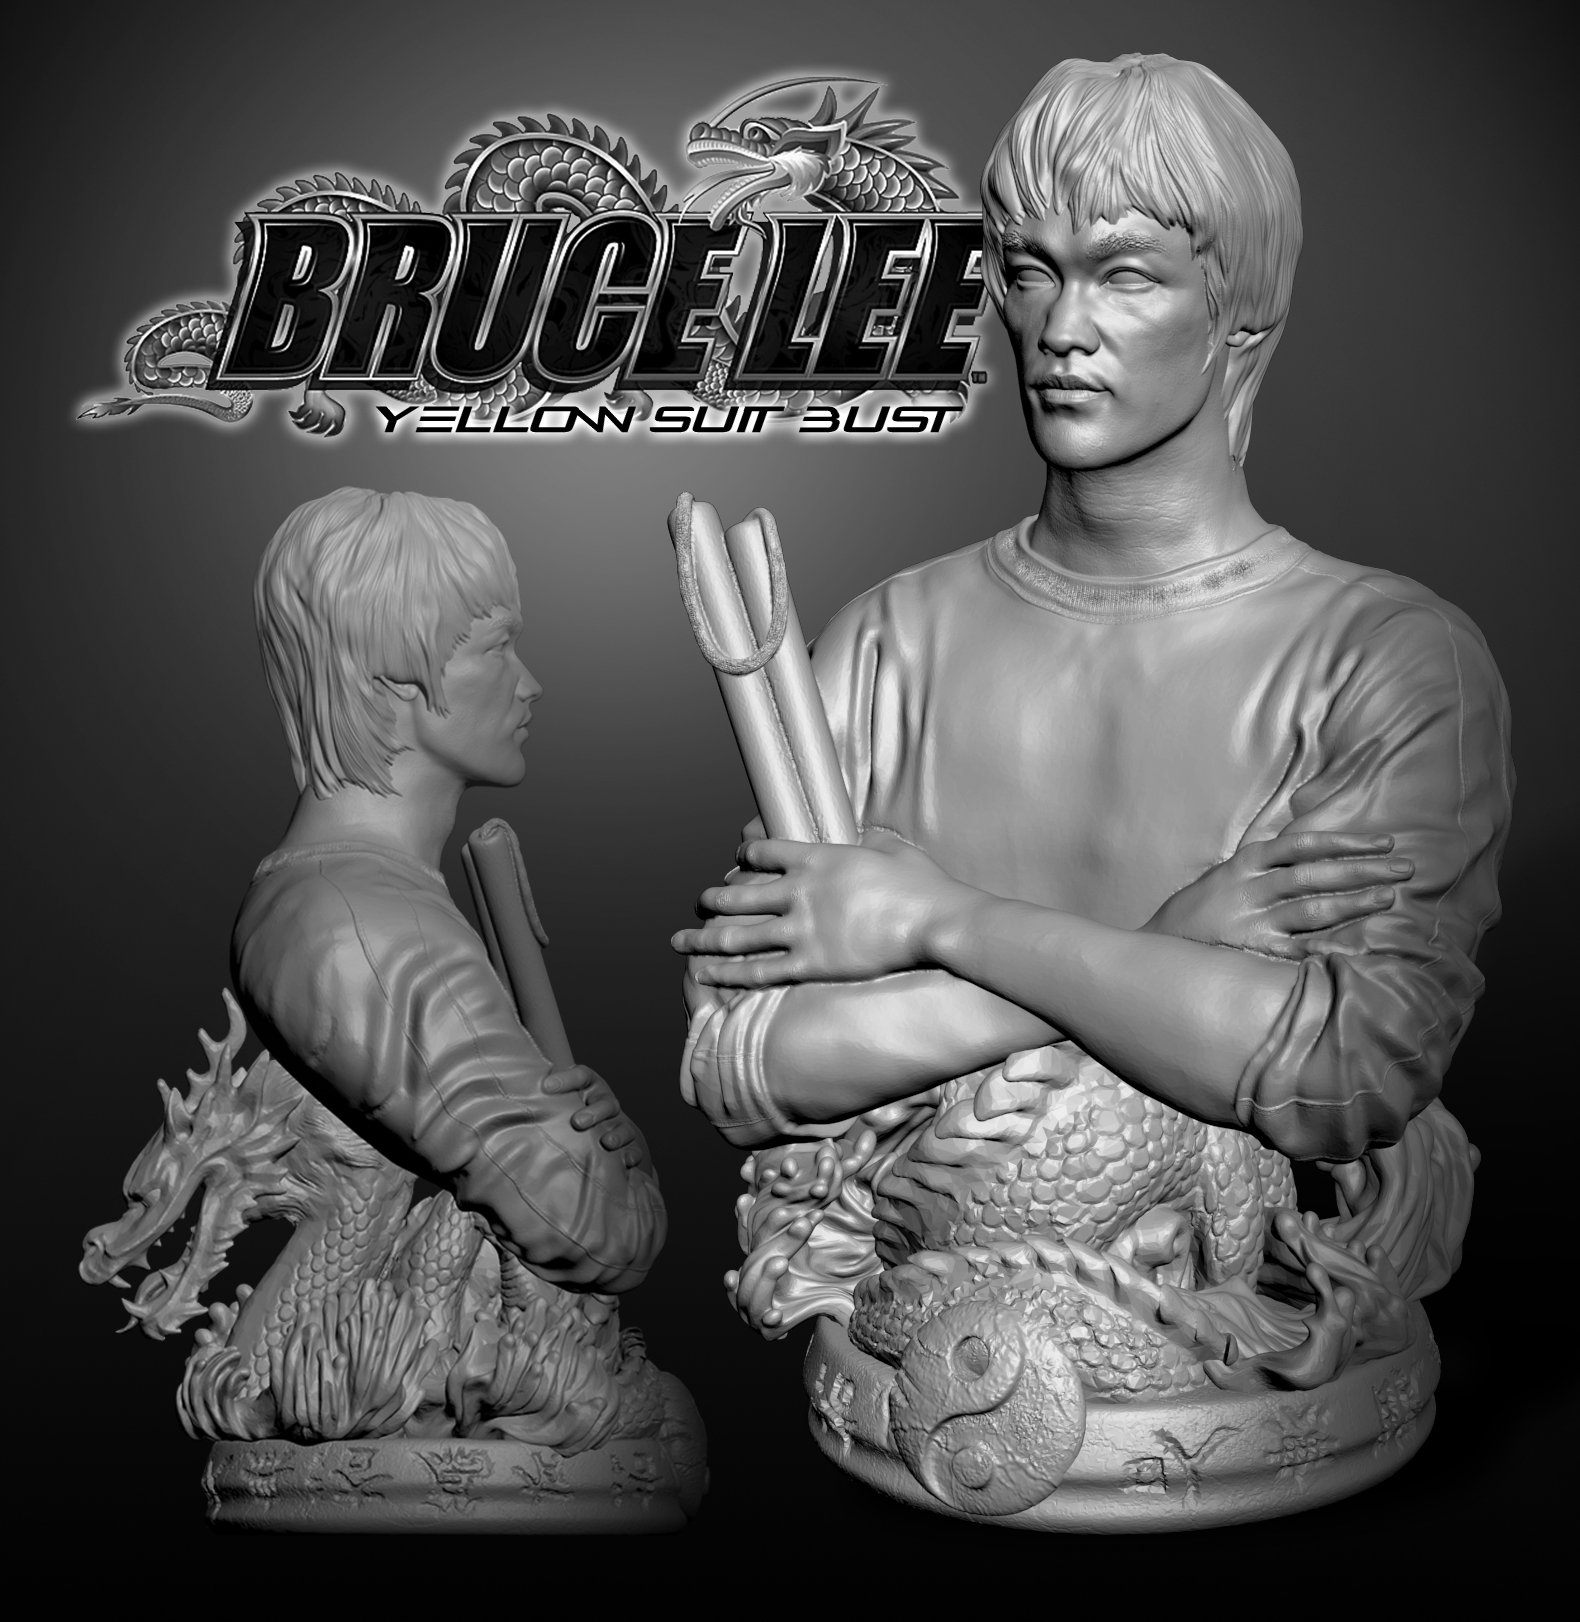 Bruce Lee Yellow Suit Bust 3D Model STL File for CNC Router Laser & 3D…